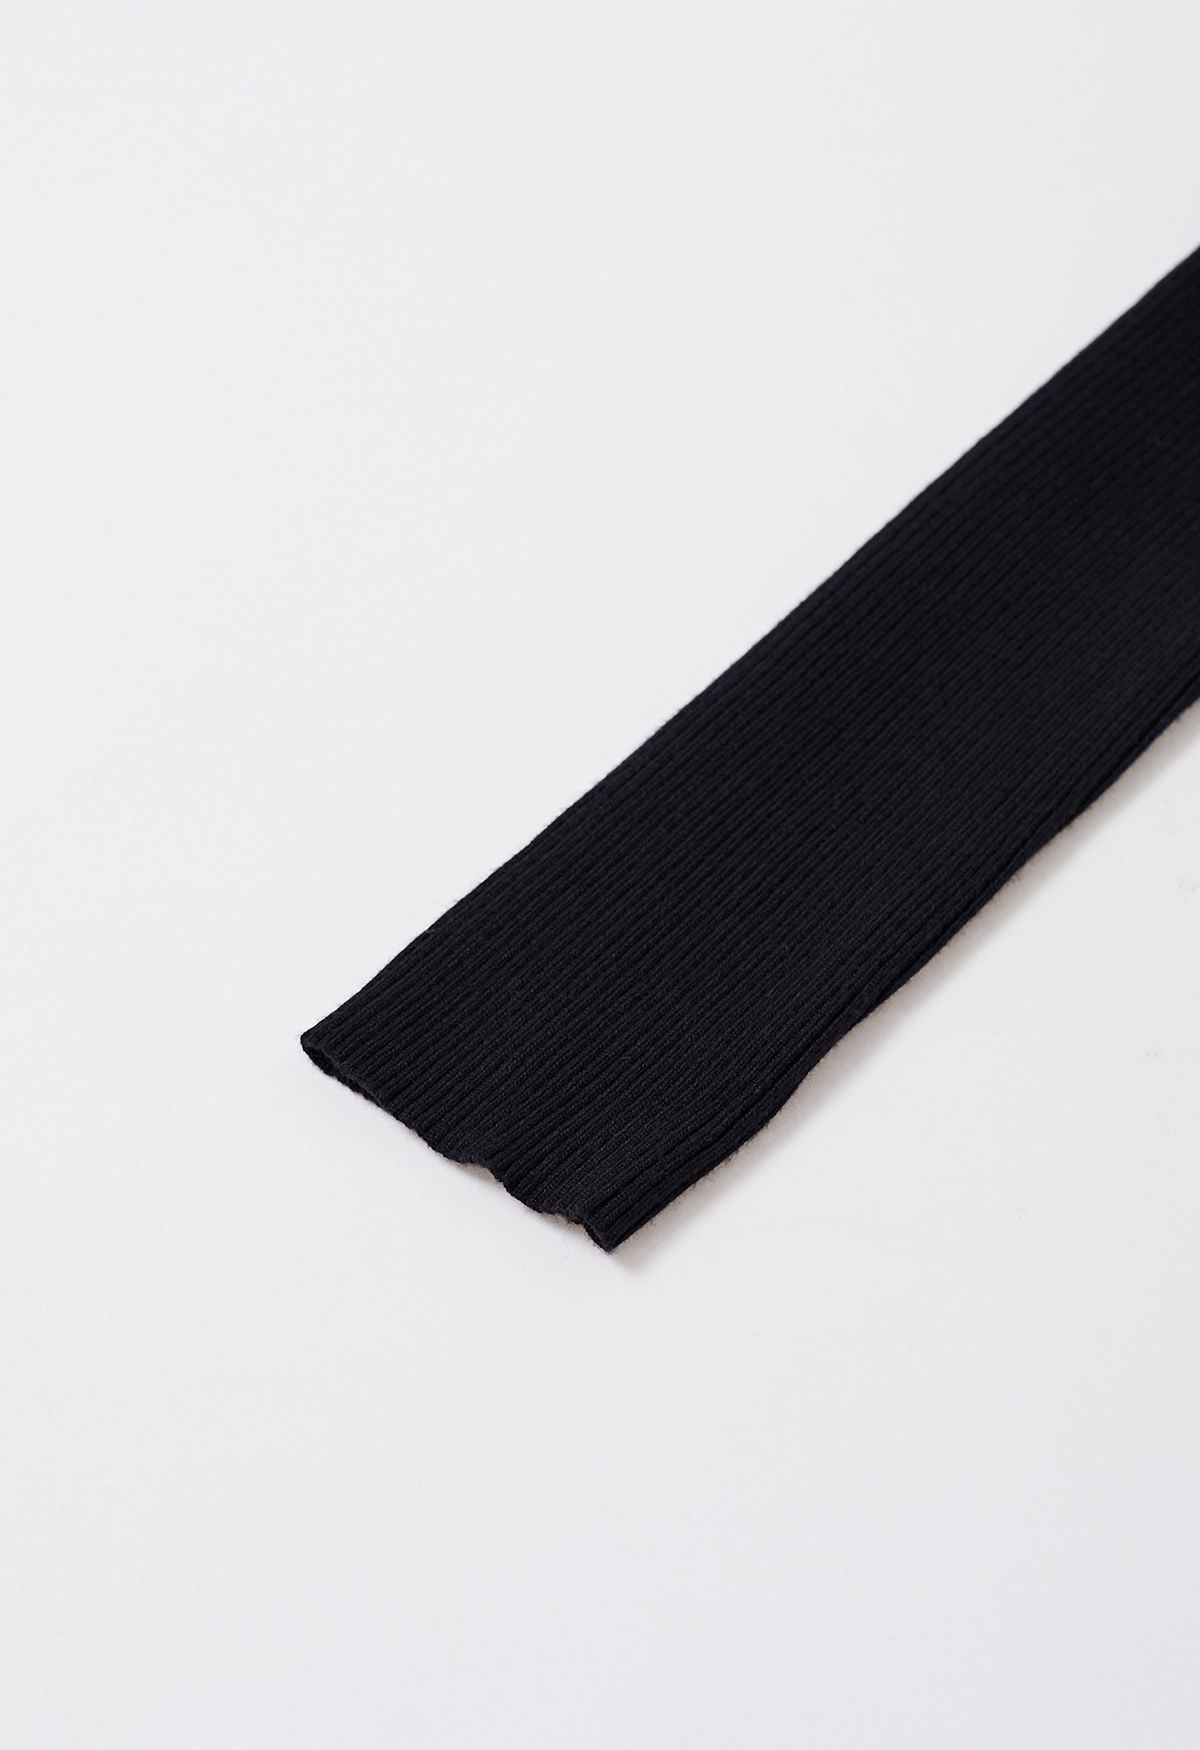 Turtleneck Mesh Inserted O-Ring Waist Knit Dress in Black